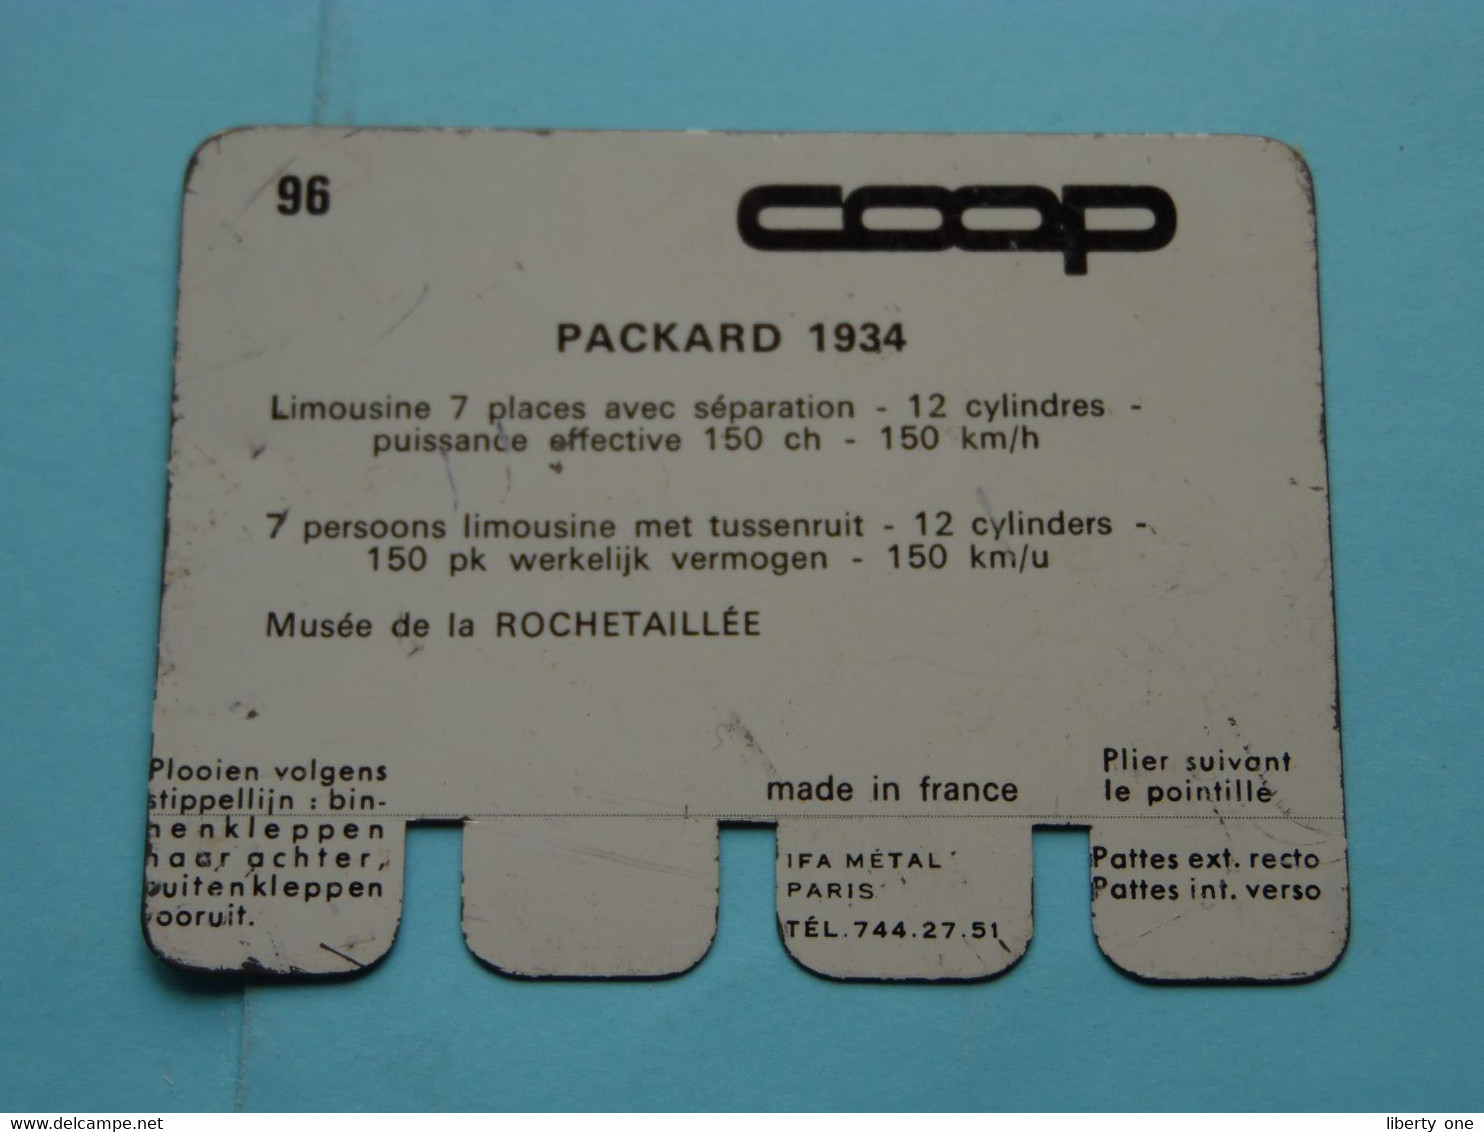 PACKARD 1934 - Coll. N° 96 NL/FR ( Plaquette C O O P - Voir Photo - IFA Metal Paris ) ! - Tin Signs (after1960)